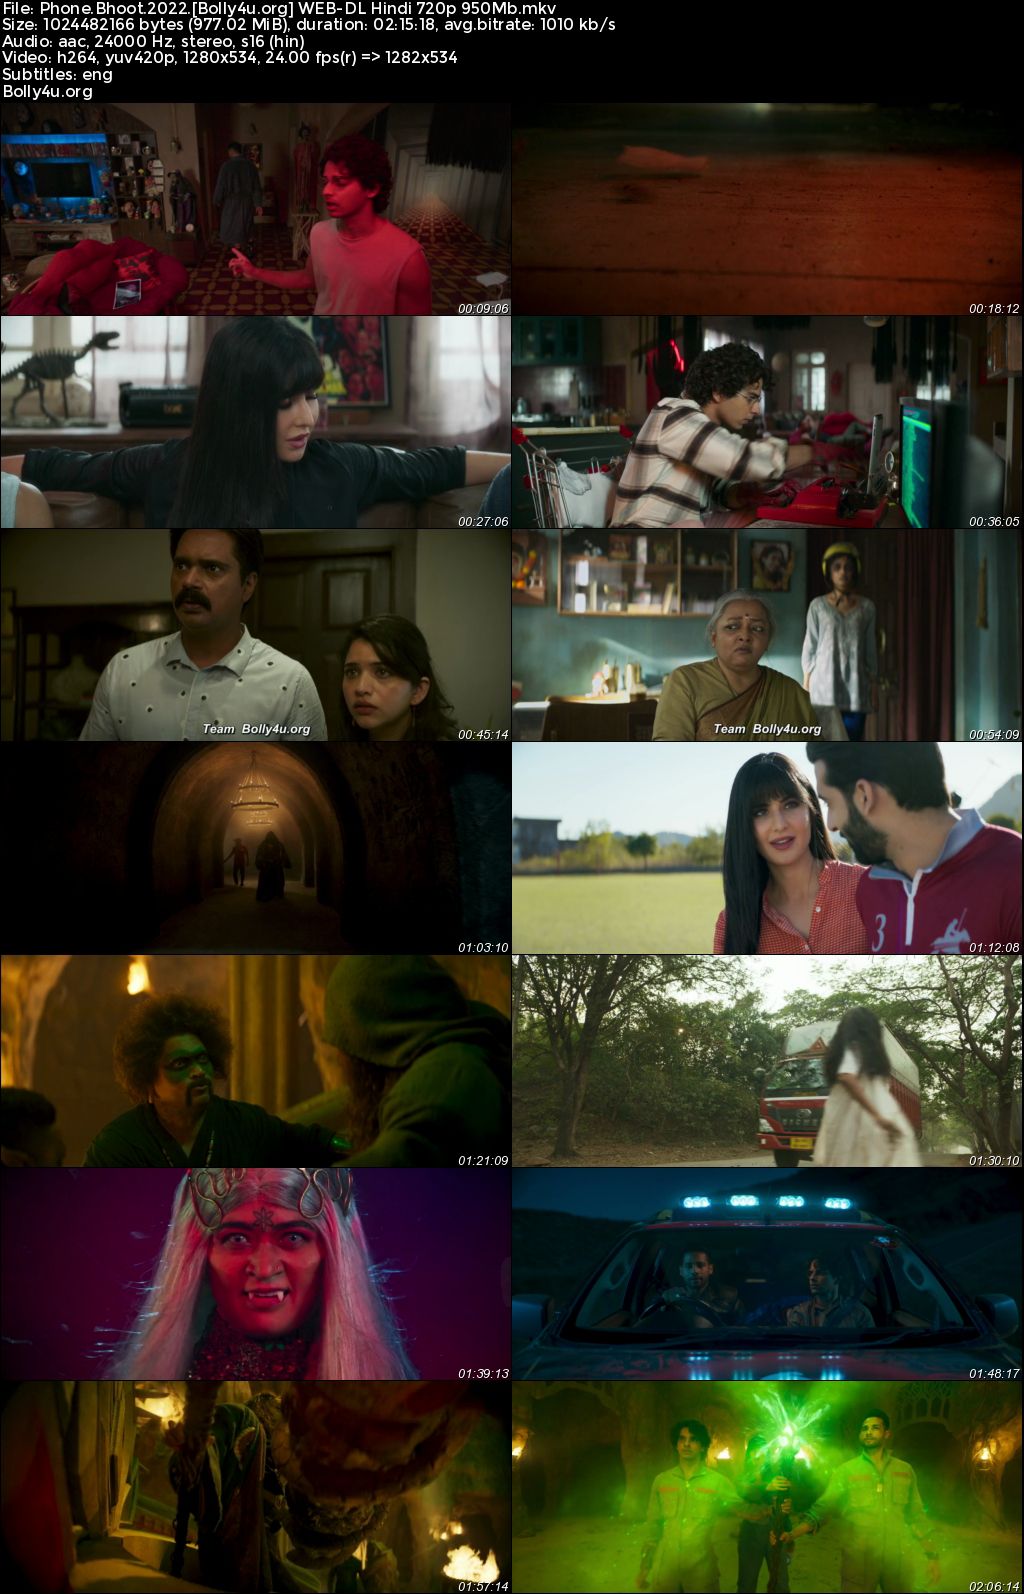 Phone Bhoot 2022 WEB-DL Hindi Full Movie Download 1080p 720p 480p